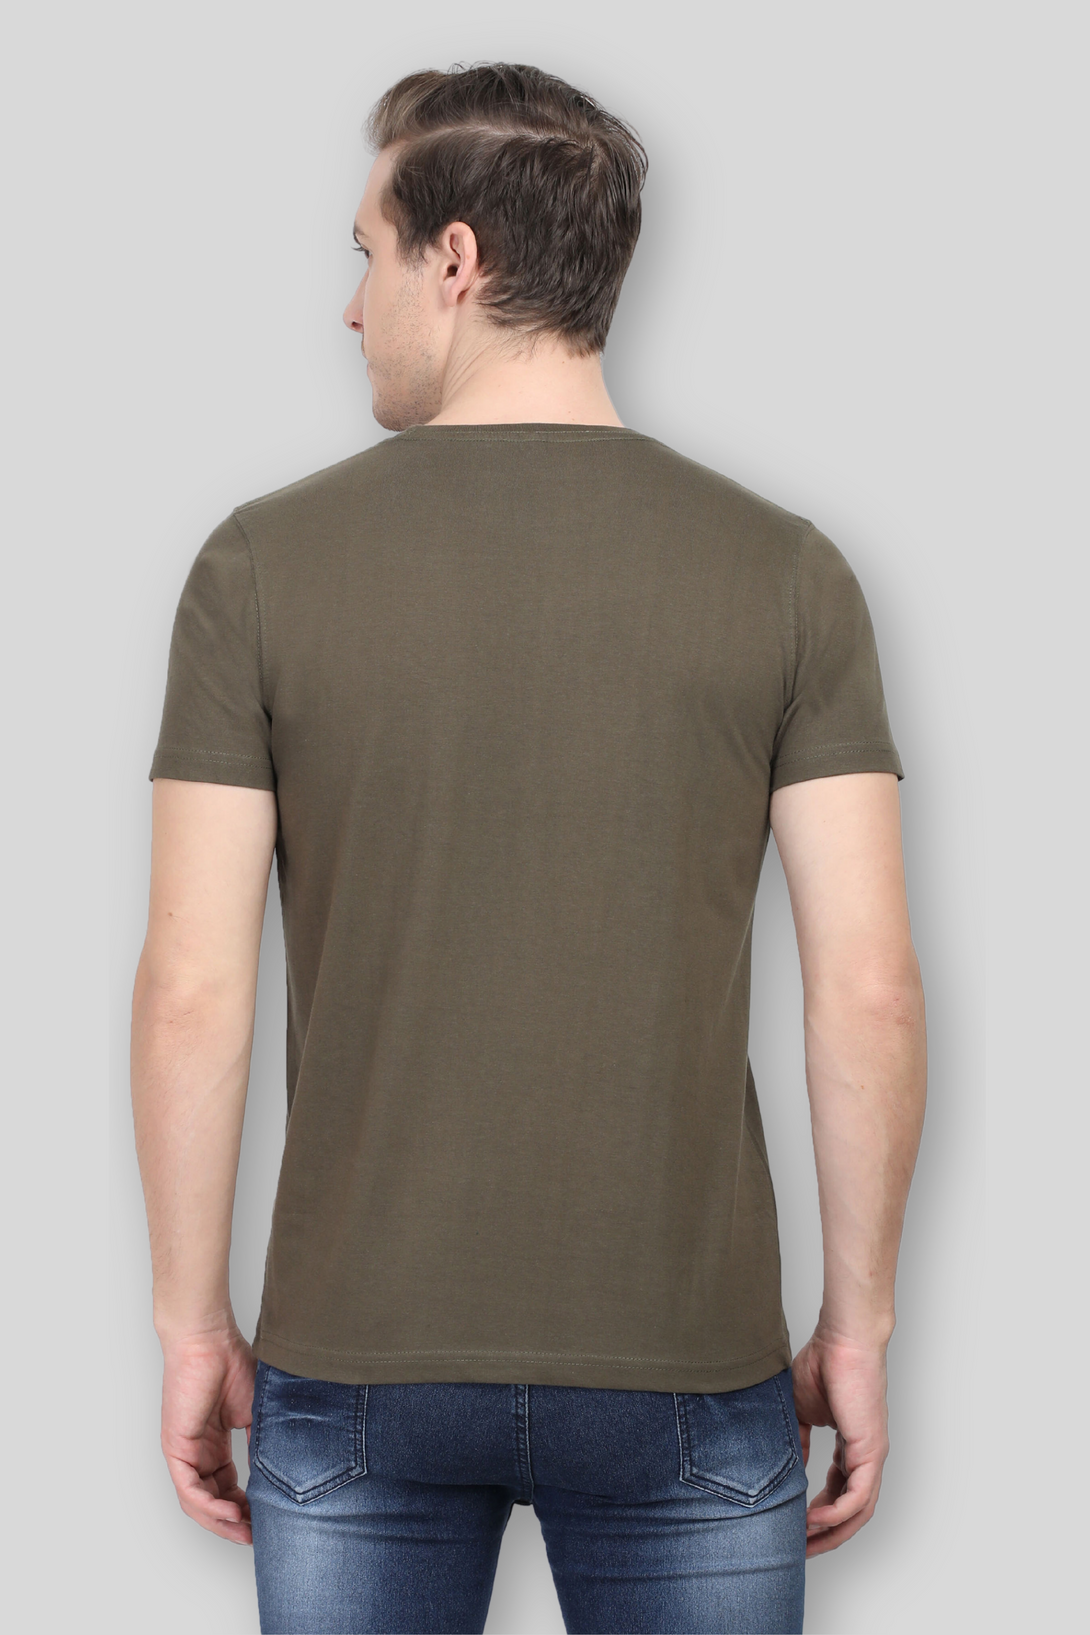 Olive Green T-Shirt For Men - WowWaves - 5